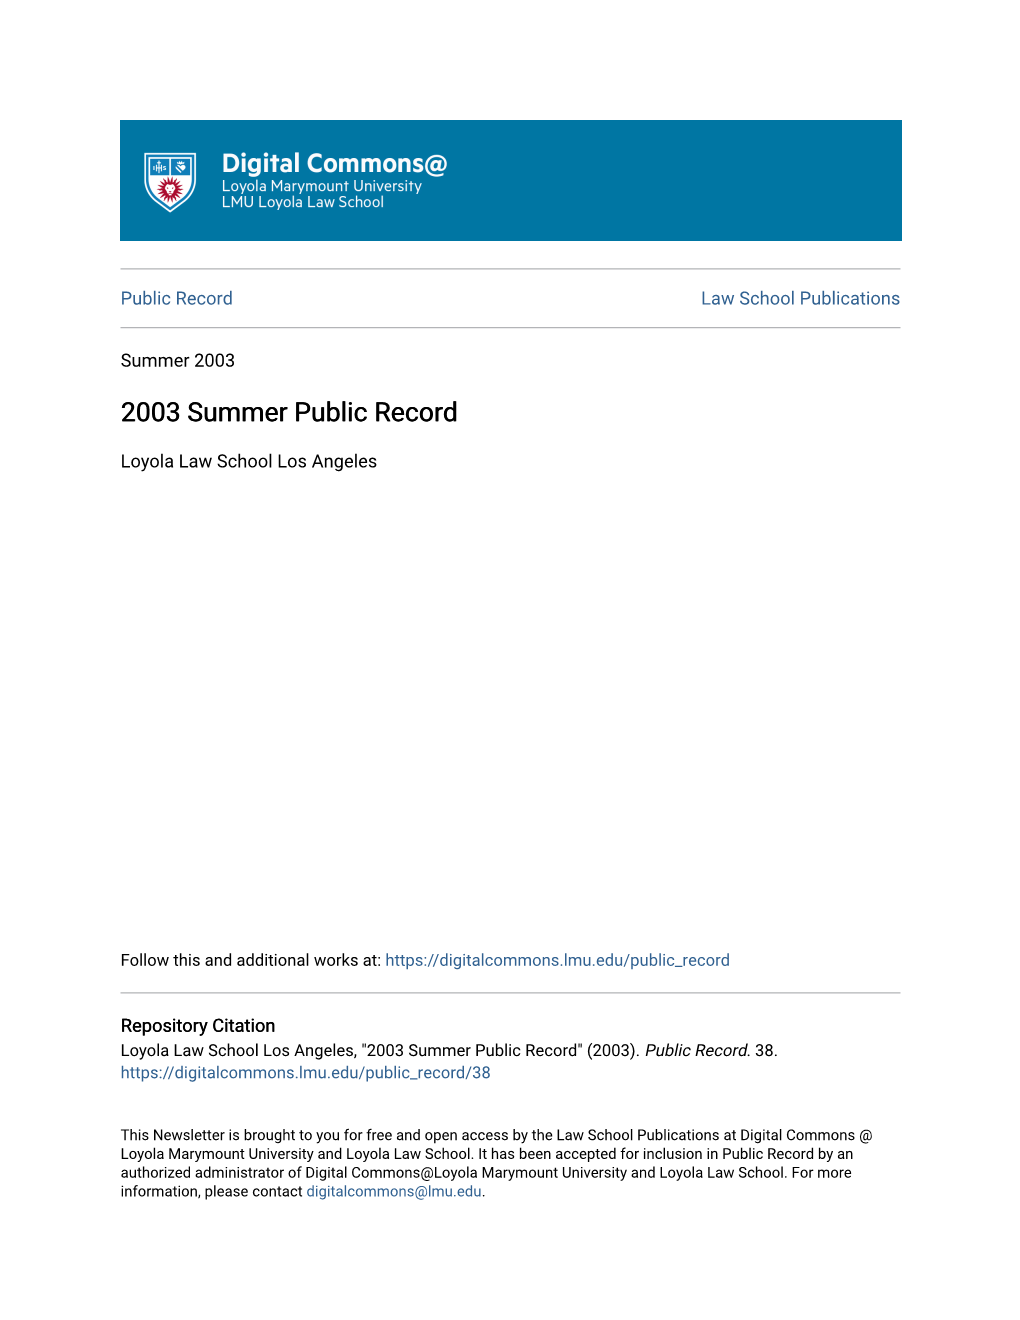 2003 Summer Public Record